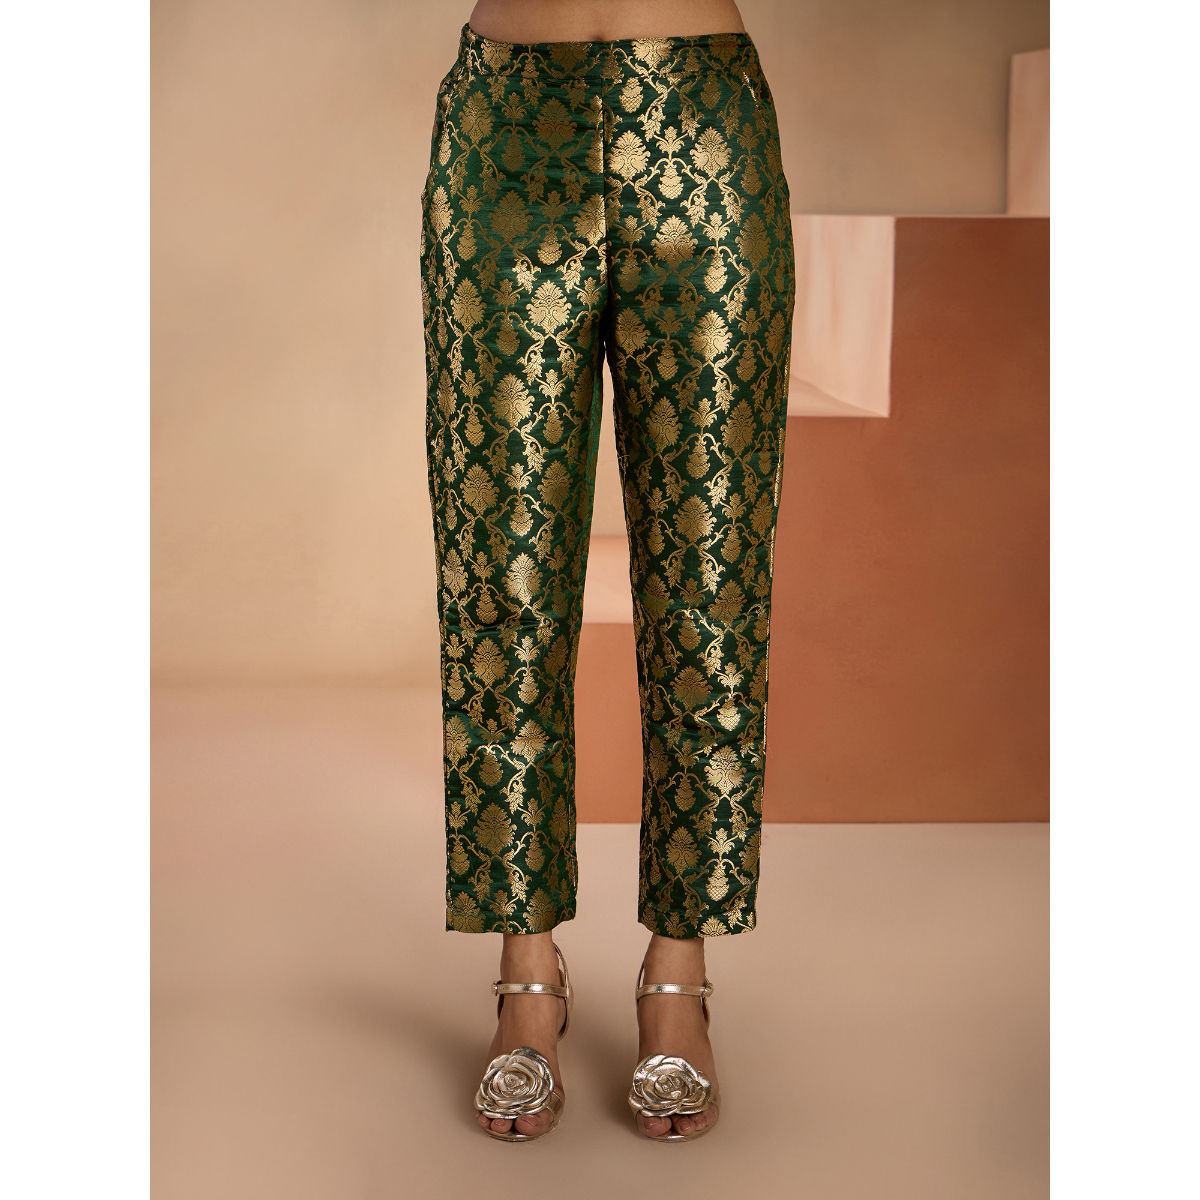 Buy Gajra Gang Banaras Dark Green Brocade Slim Pant GGBTM05 Online